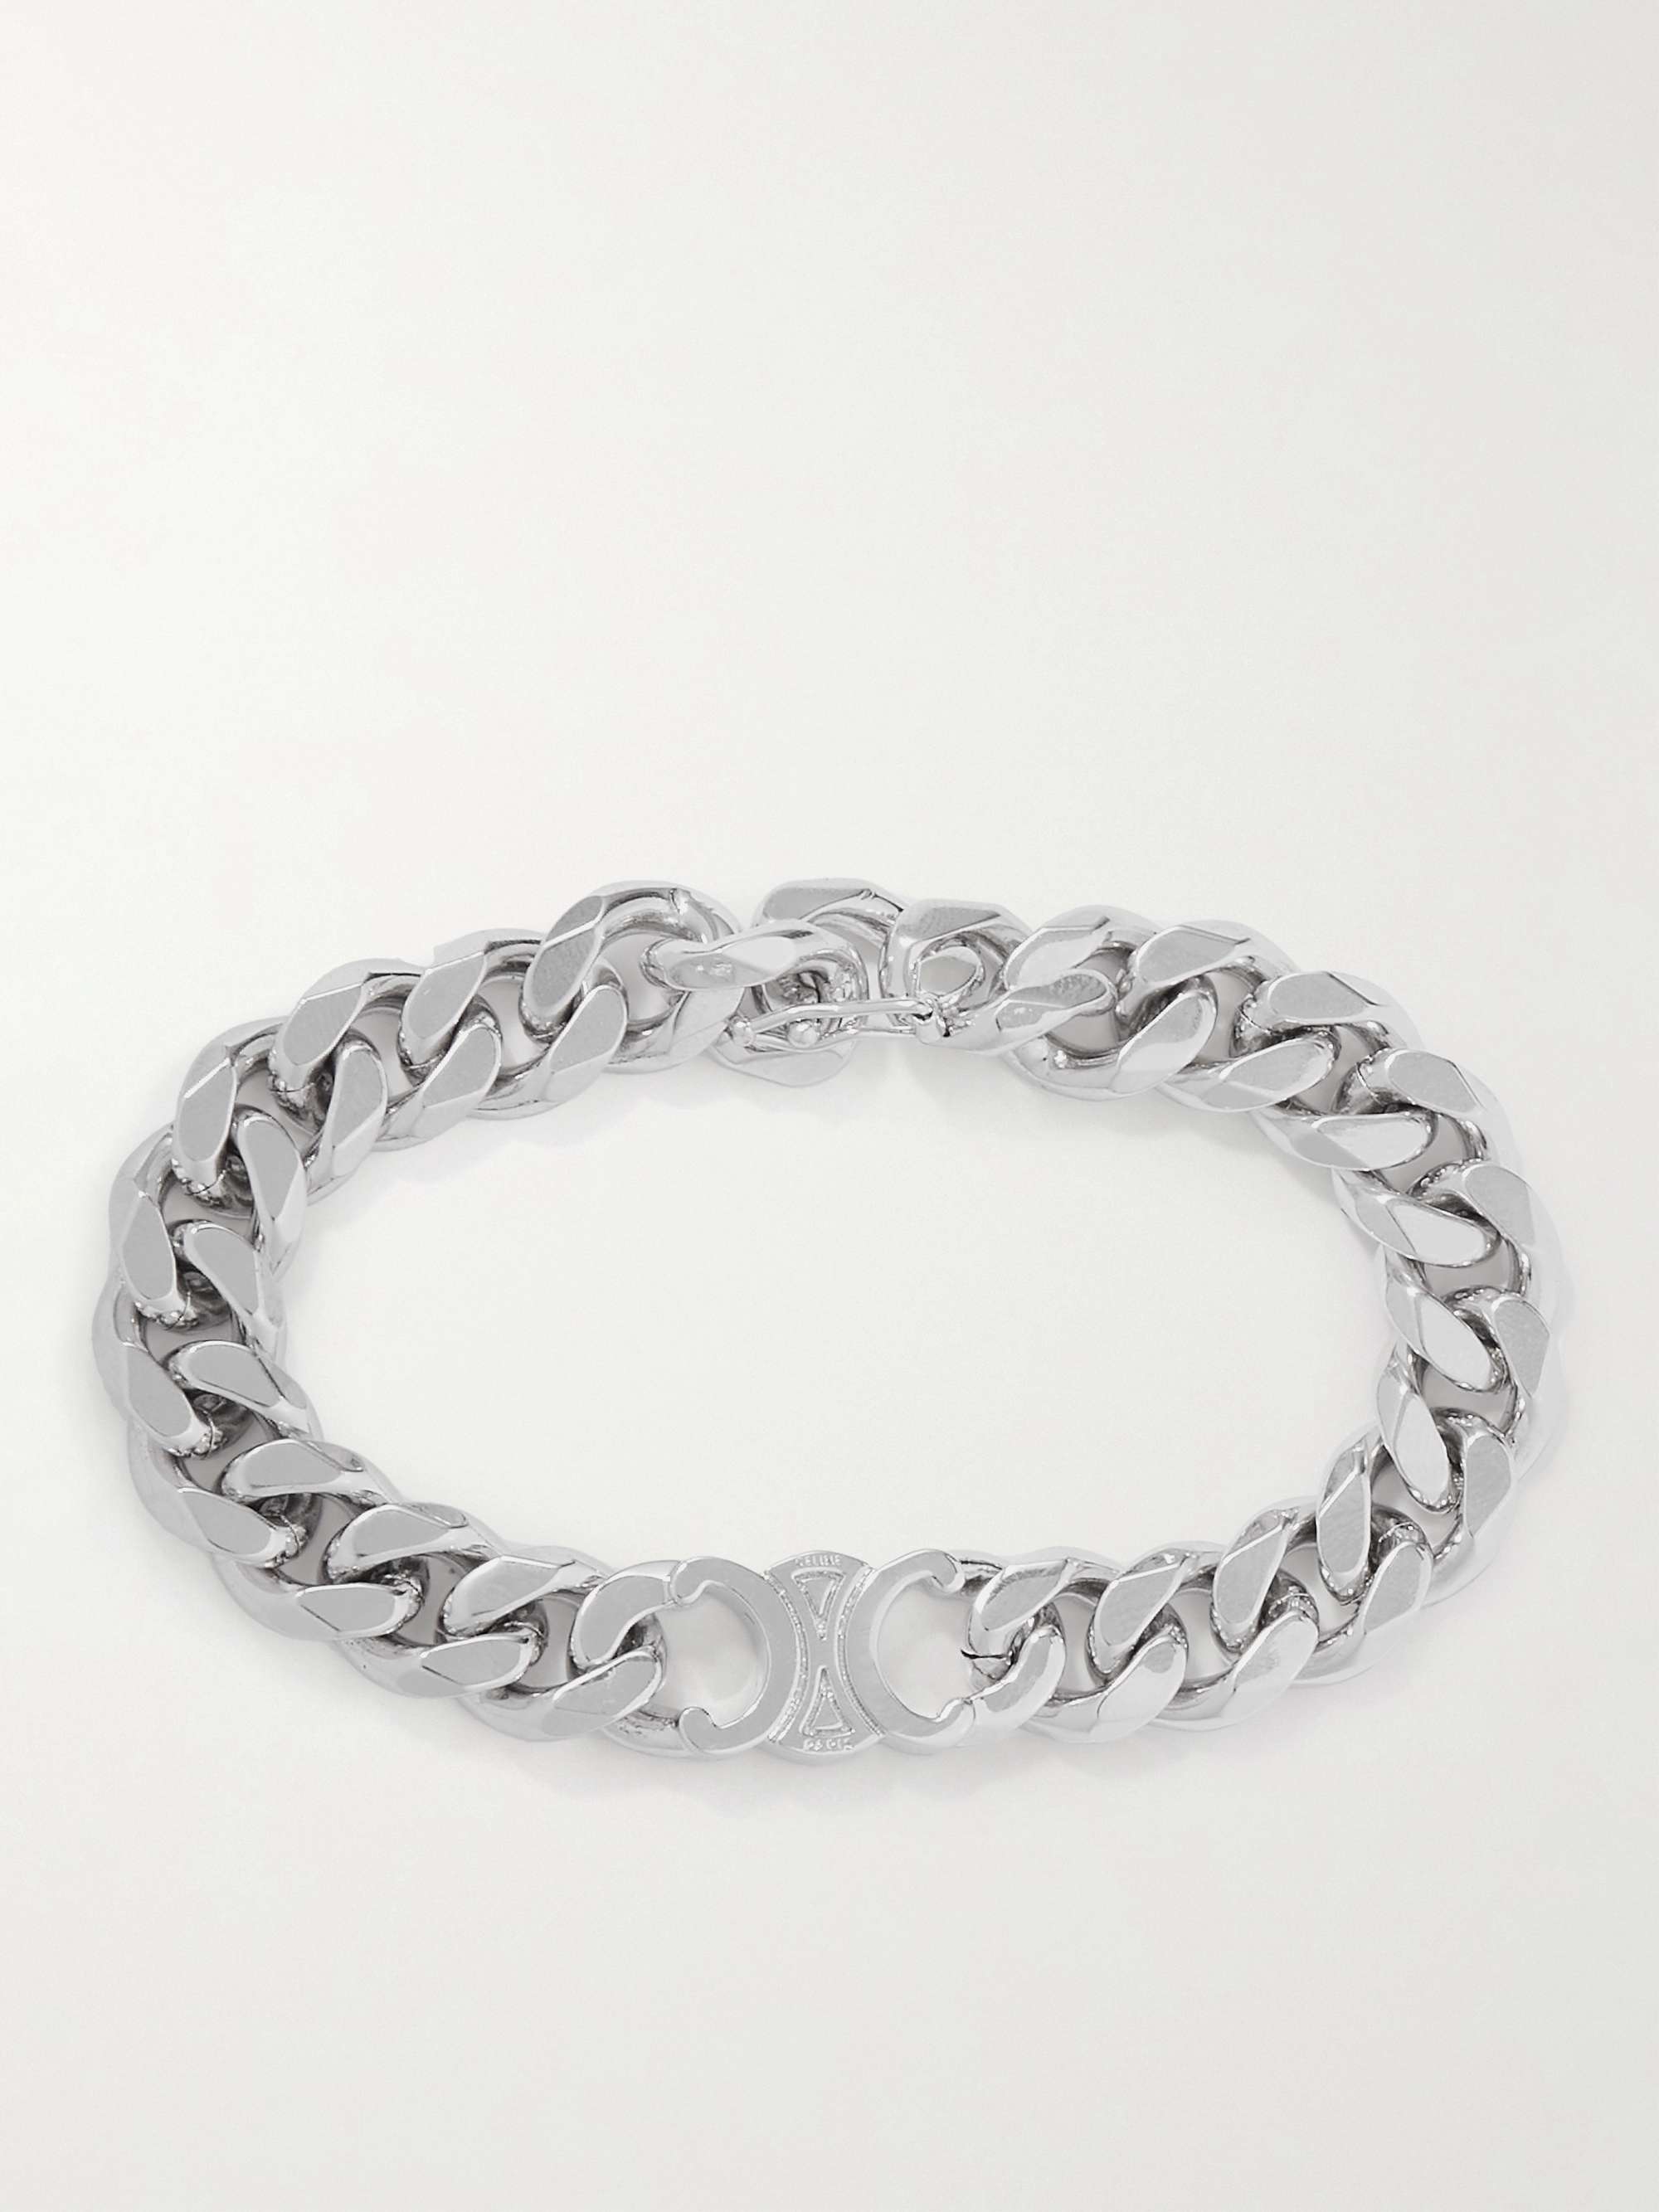 CELINE HOMME Triomphe Silver-Tone Chain Bracelet